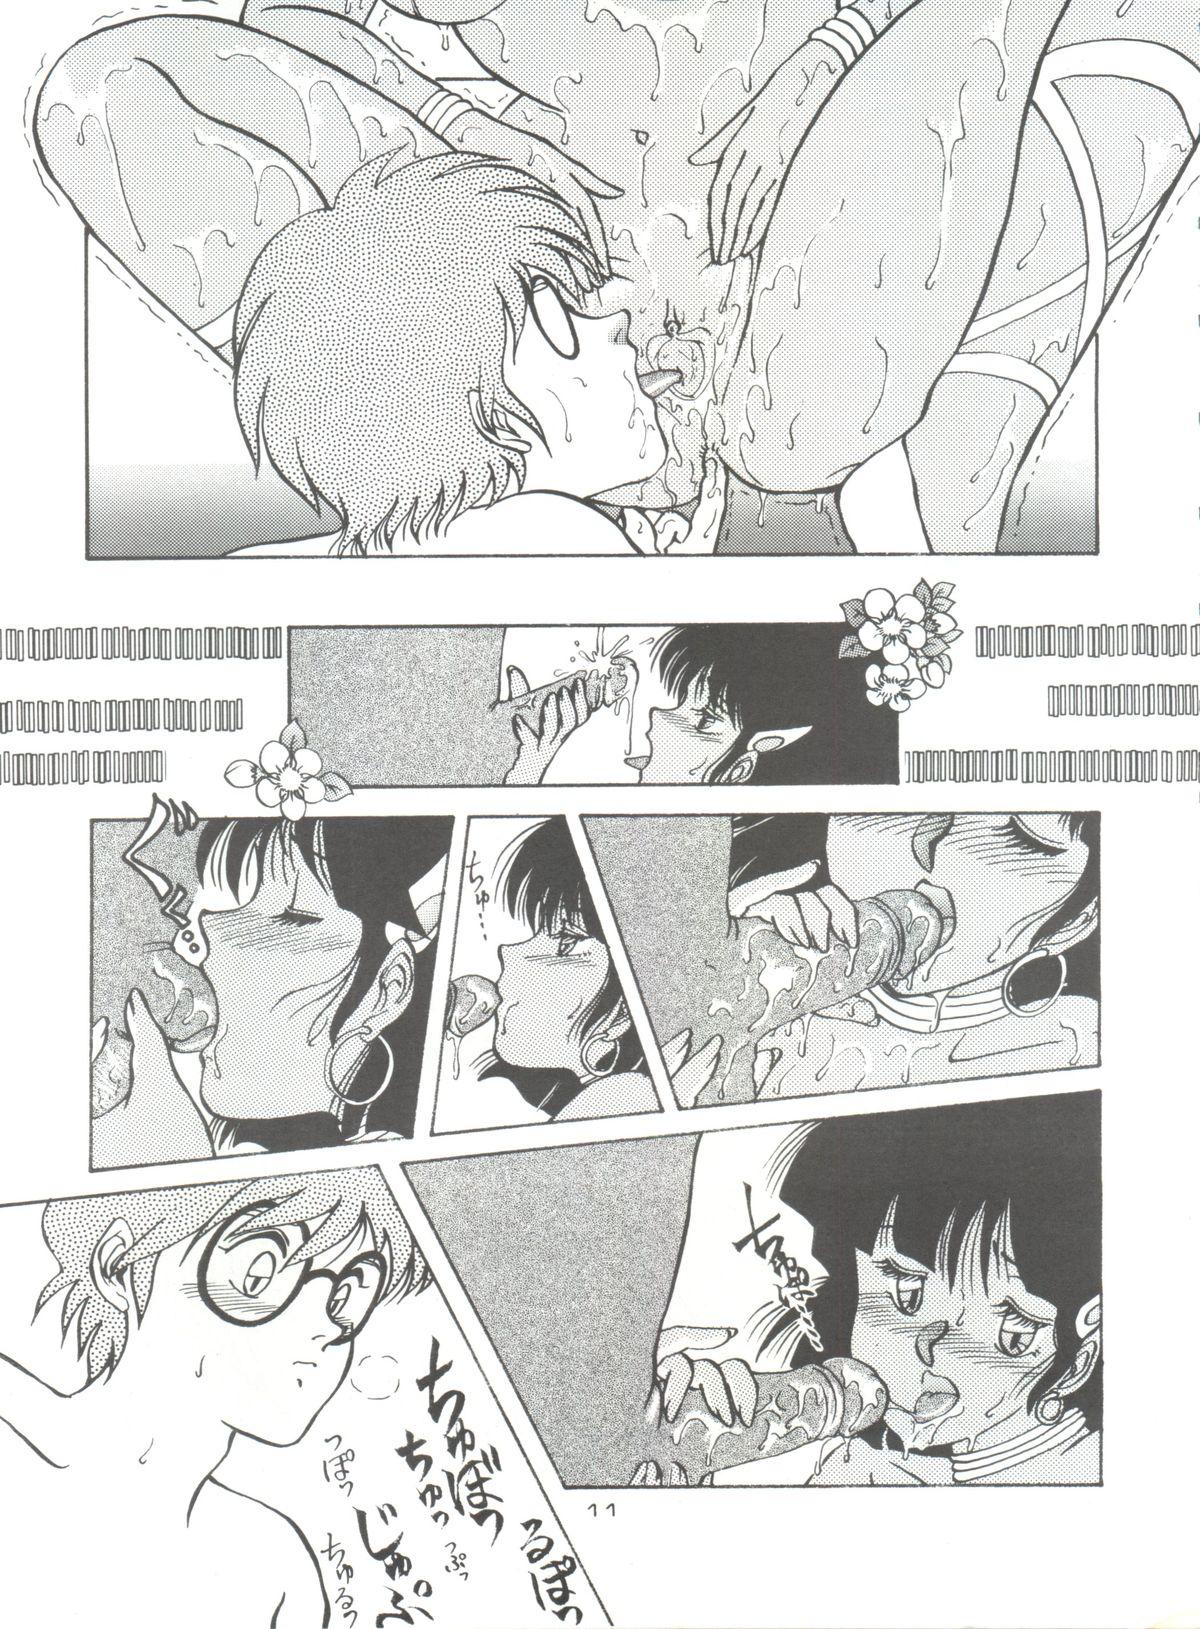 Hard Sex Nadia Girls in Emerald Sea vol. 2 - Minies Club 23 - Fushigi no umi no nadia High Heels - Page 11